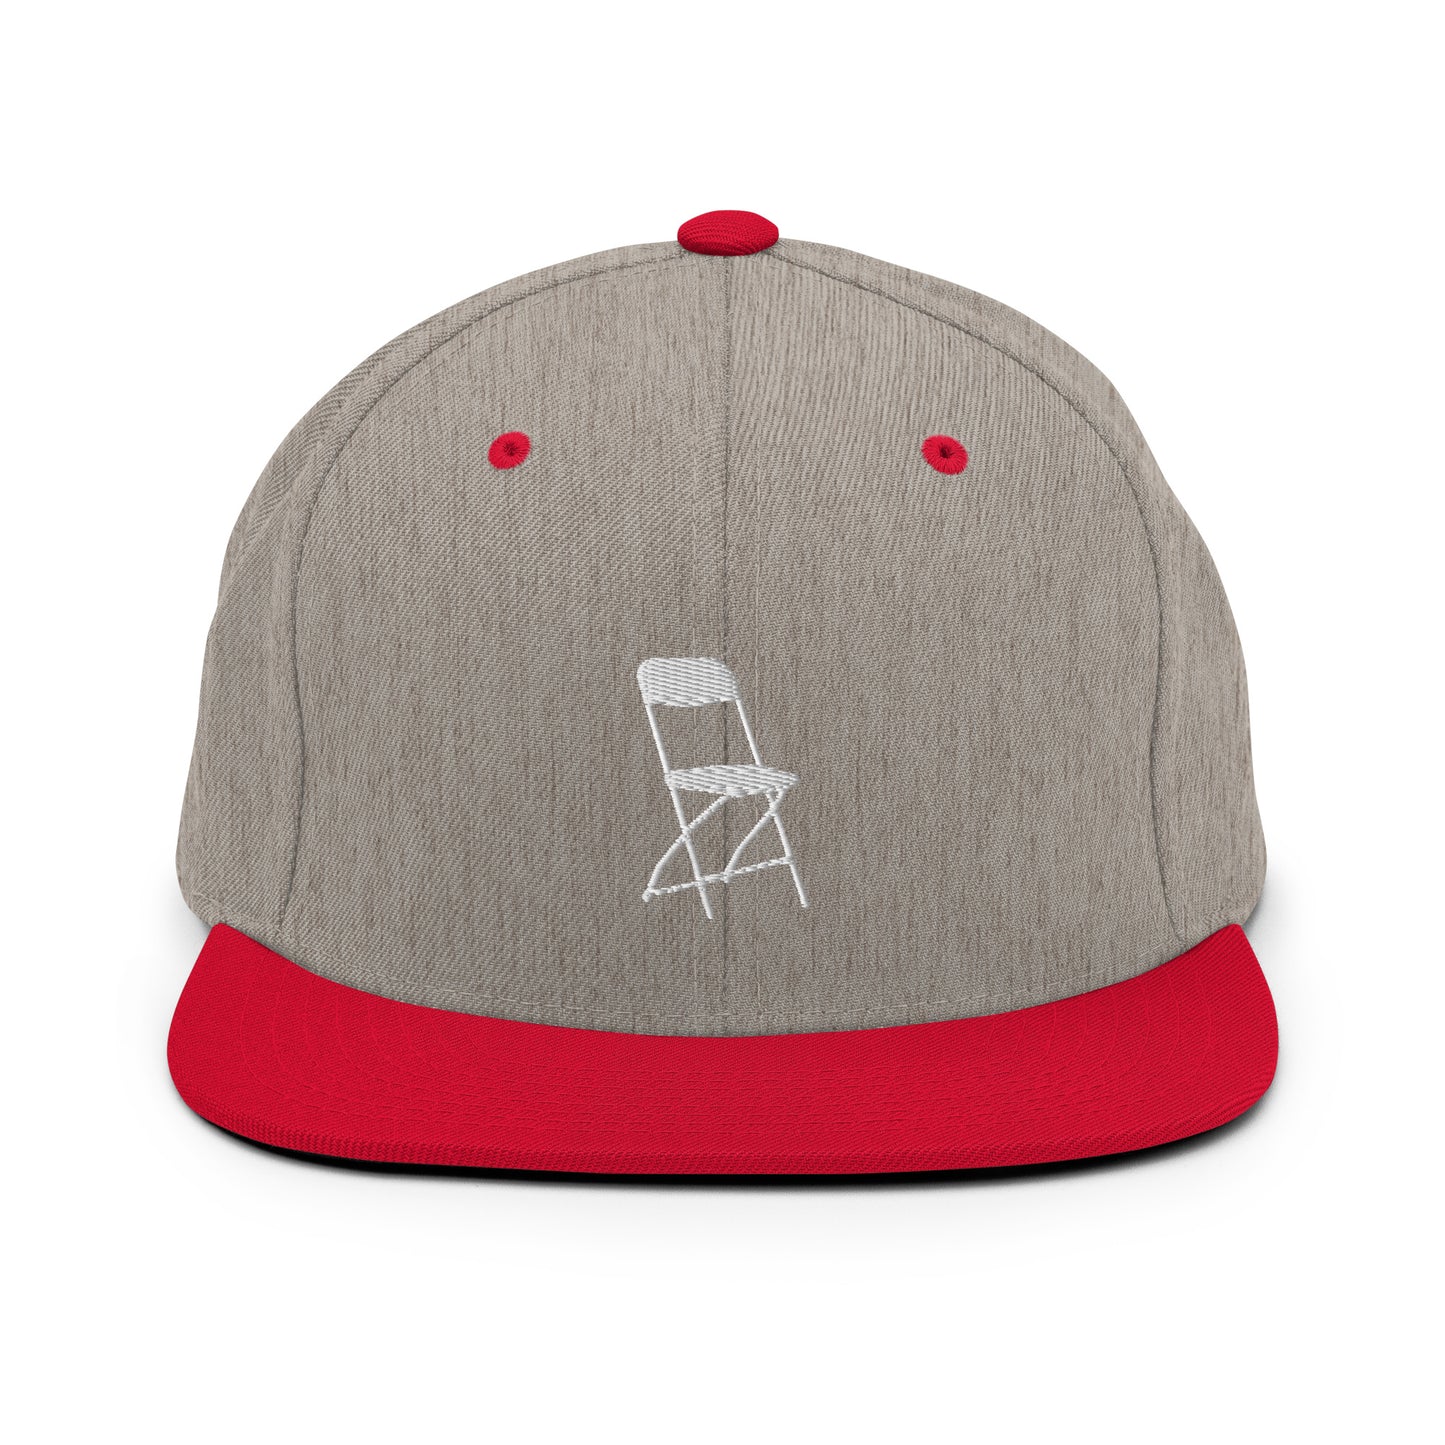 Folding Chair Snapback Hat